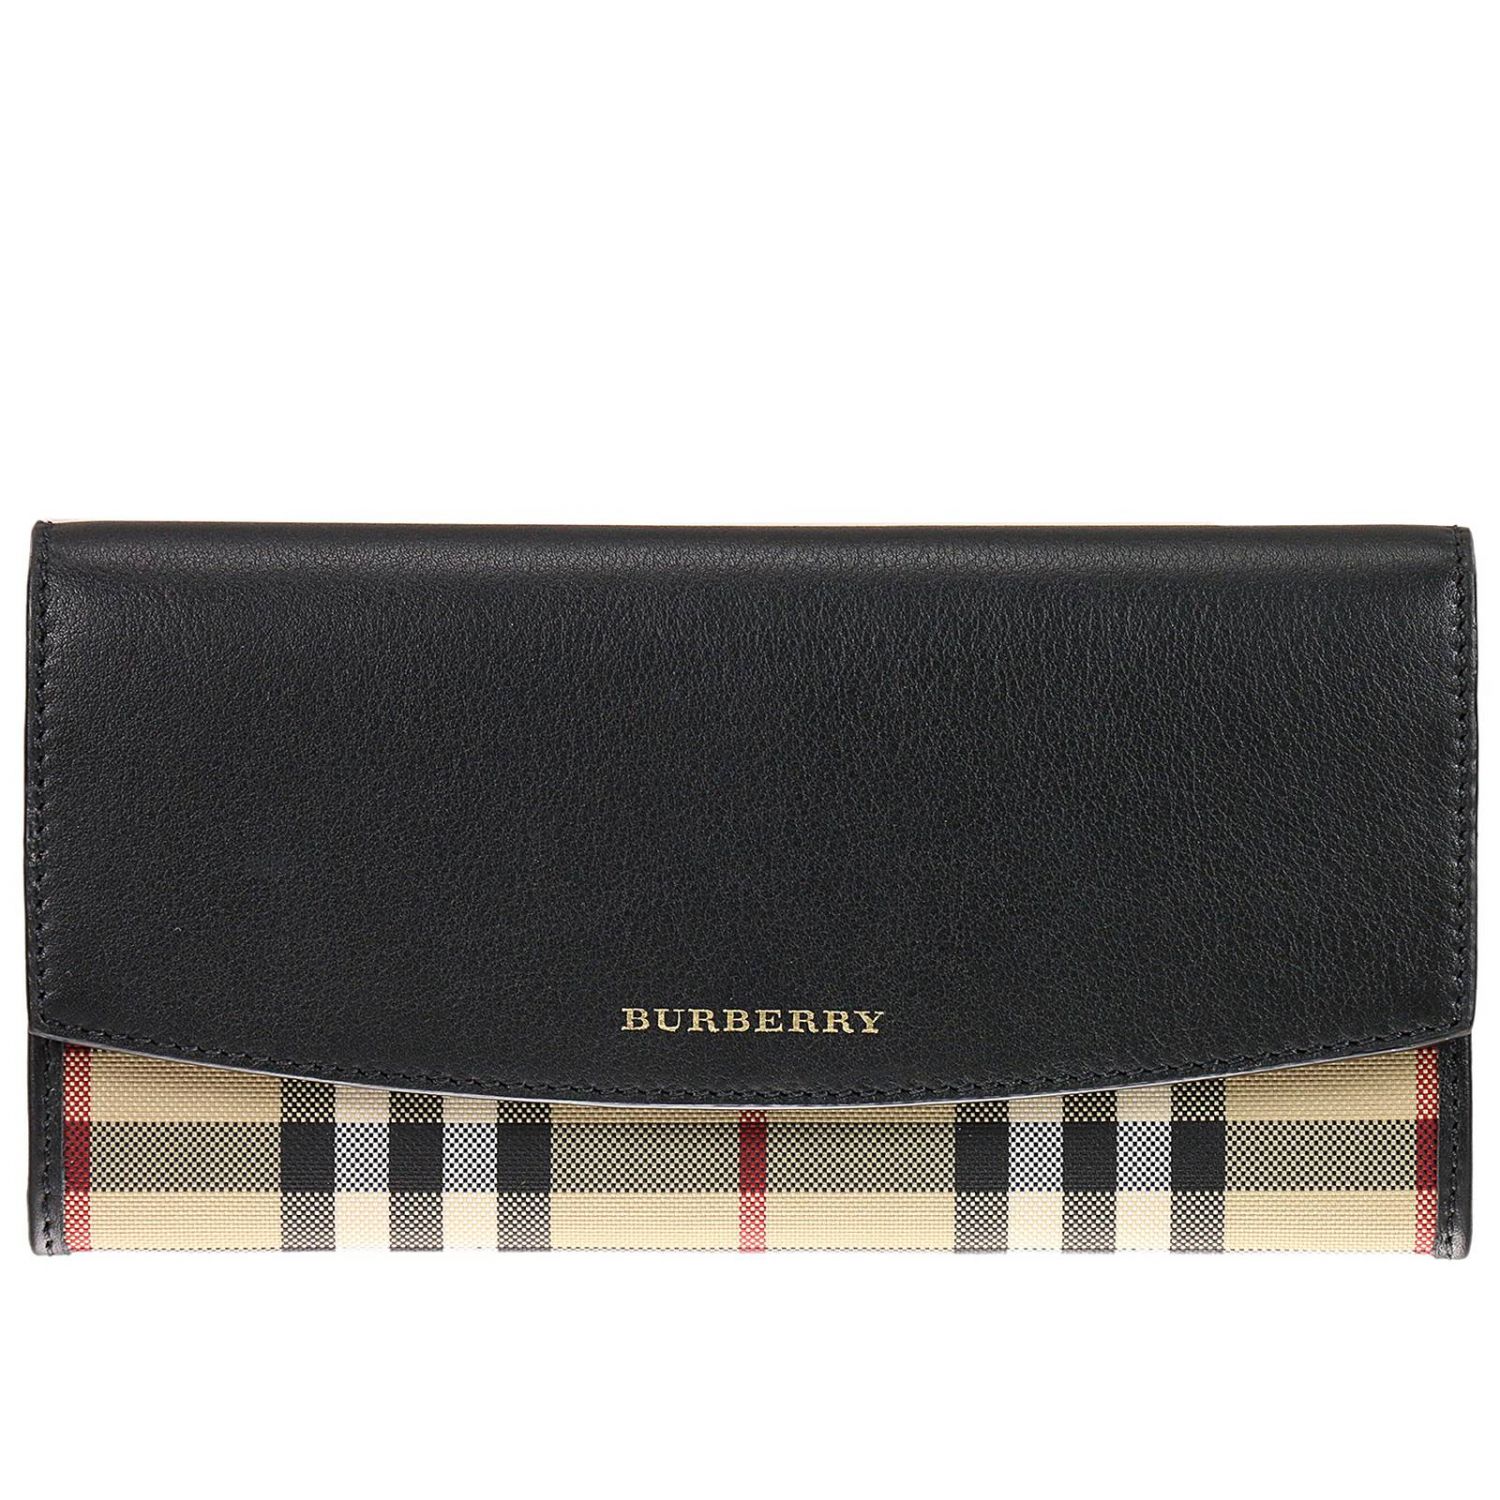 Wallet women Burberry | Wallet Burberry Women Black | Wallet Burberry ...